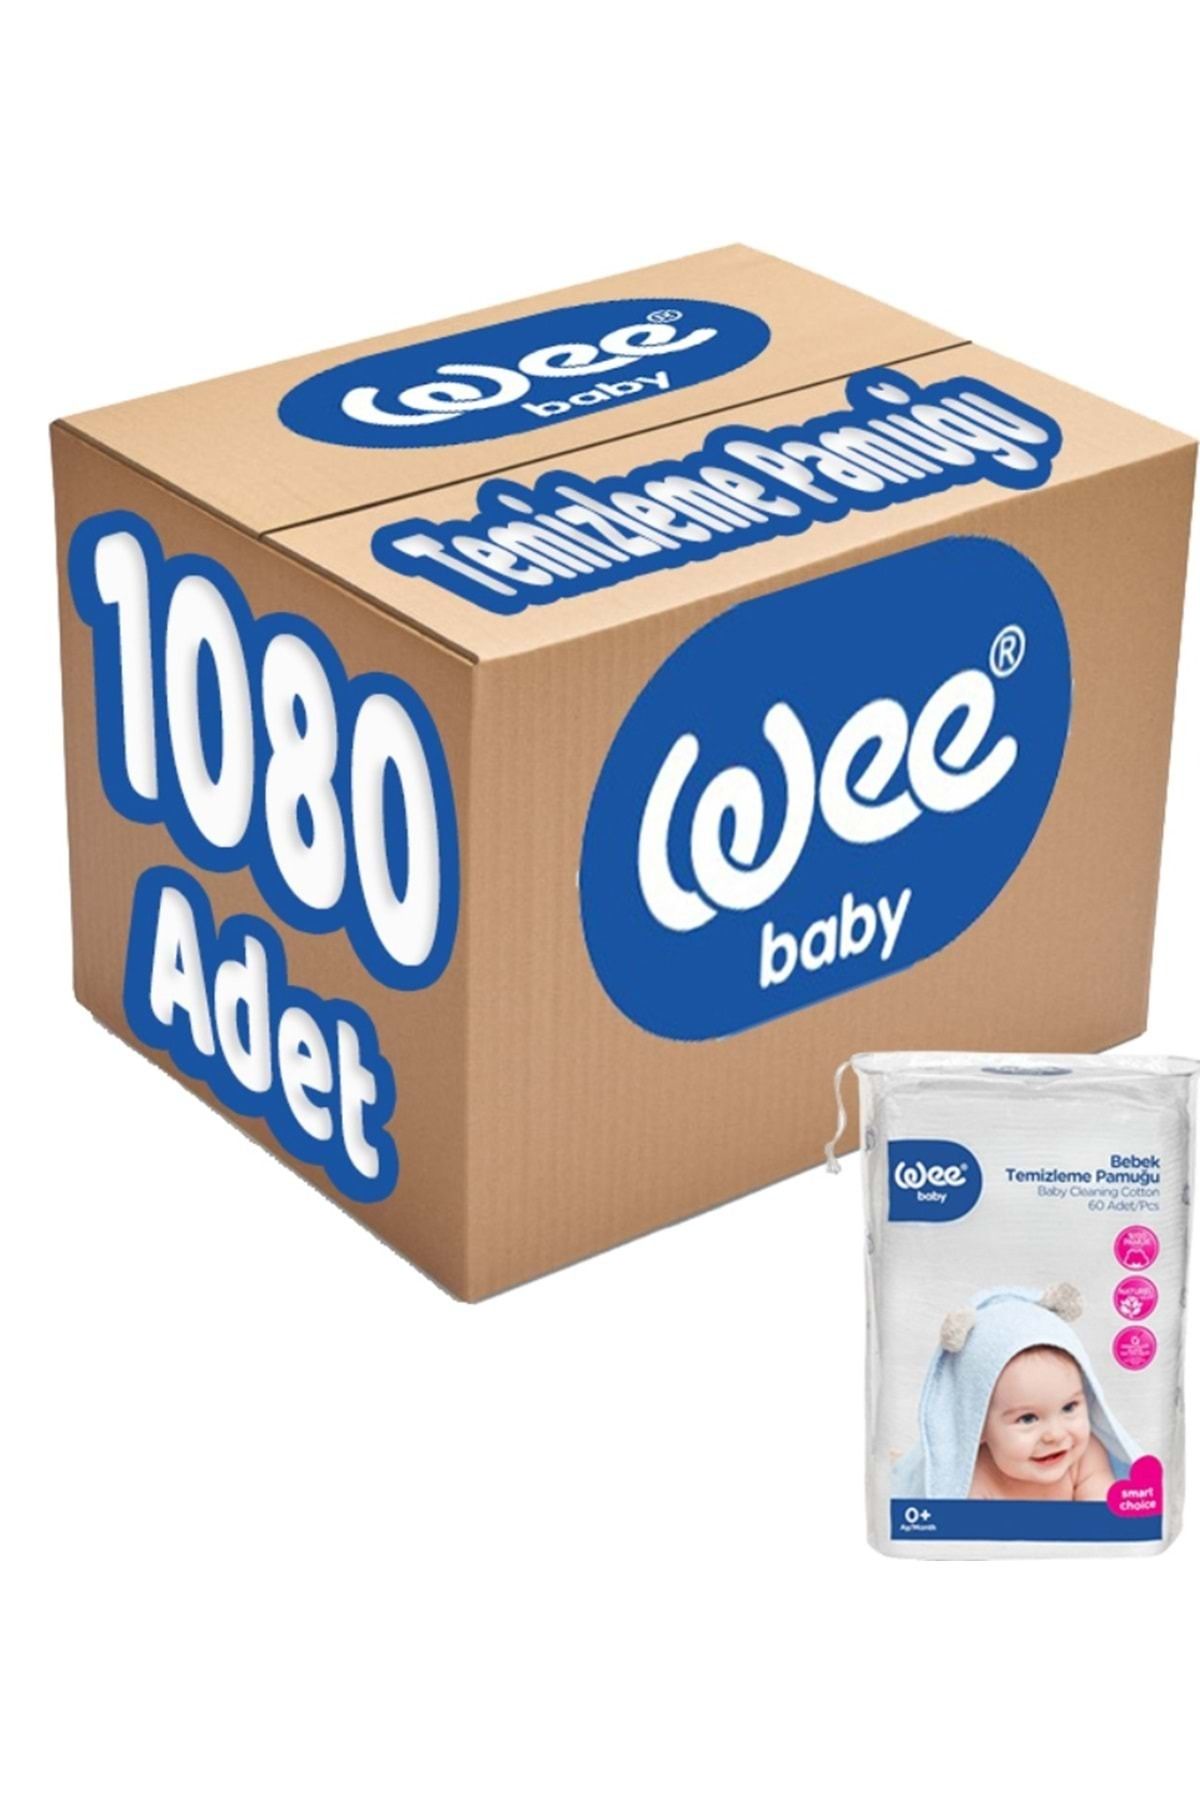 Wee Baby Bebek Temizleme Pamuğu 1080 Adet (18pk*60)